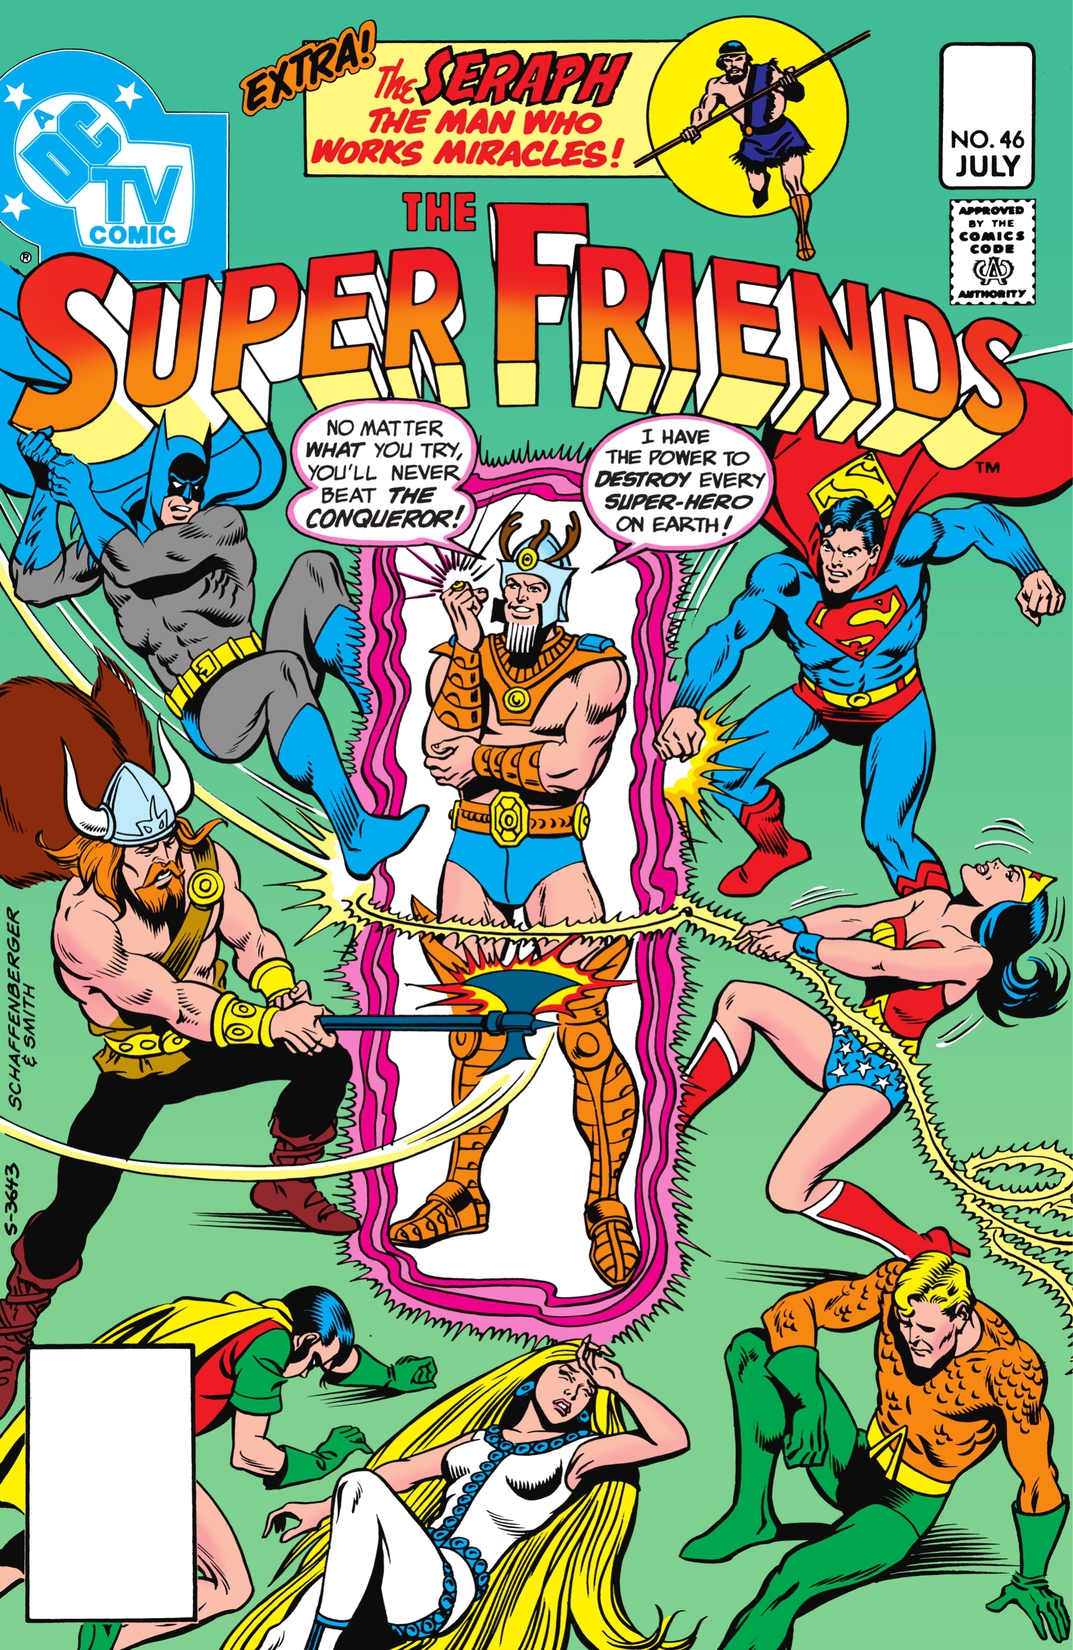 Super Friends (1976-1981) #46 preview images